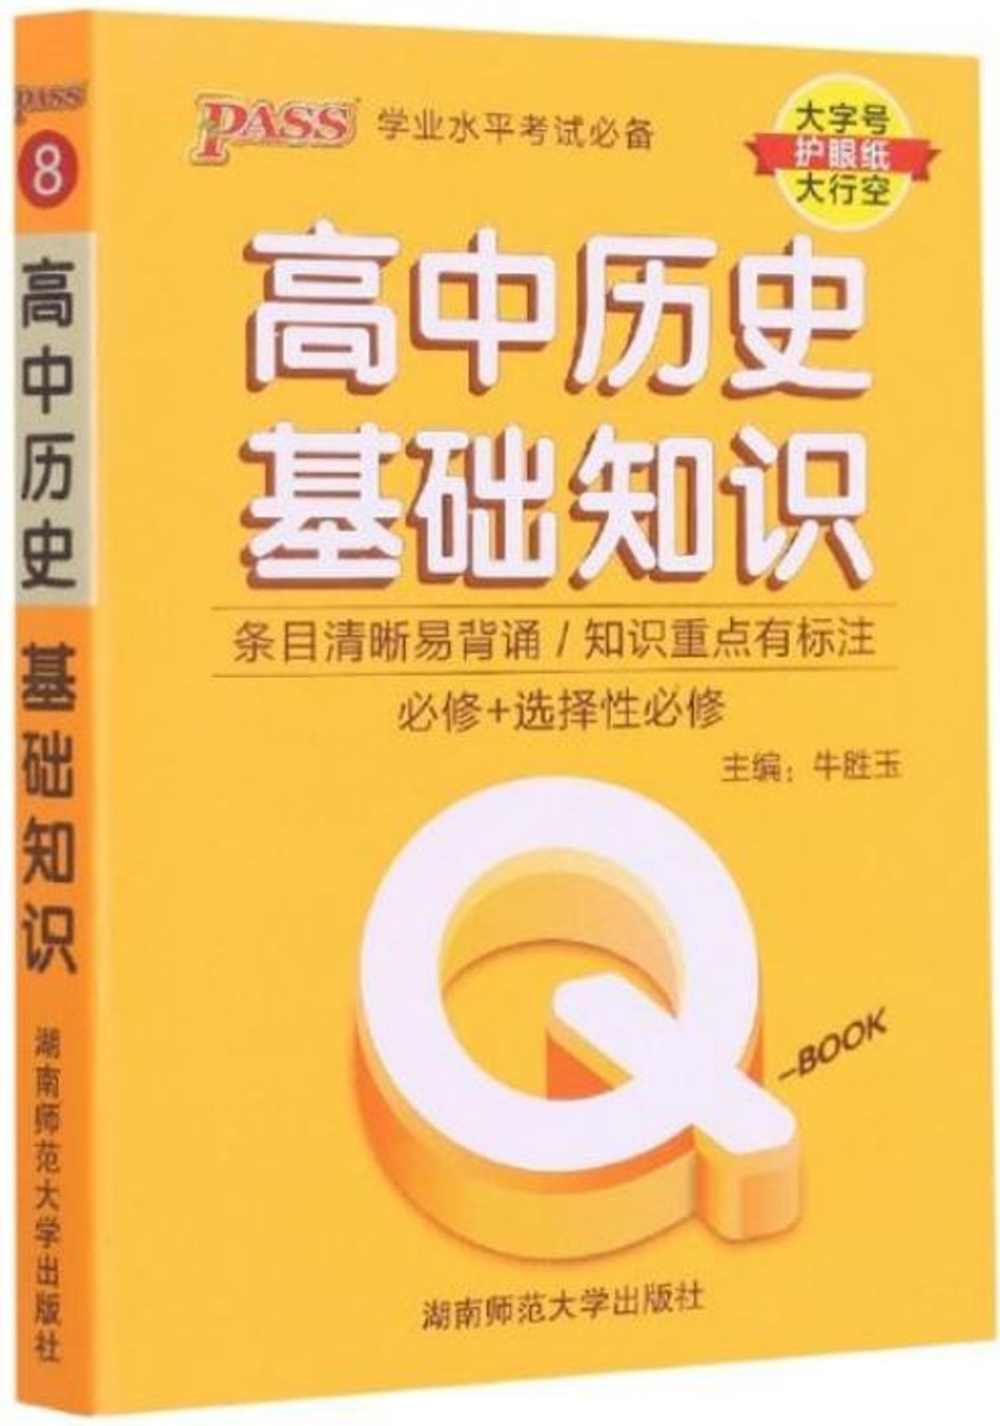 Q-BOOK.高中歷史基礎知識